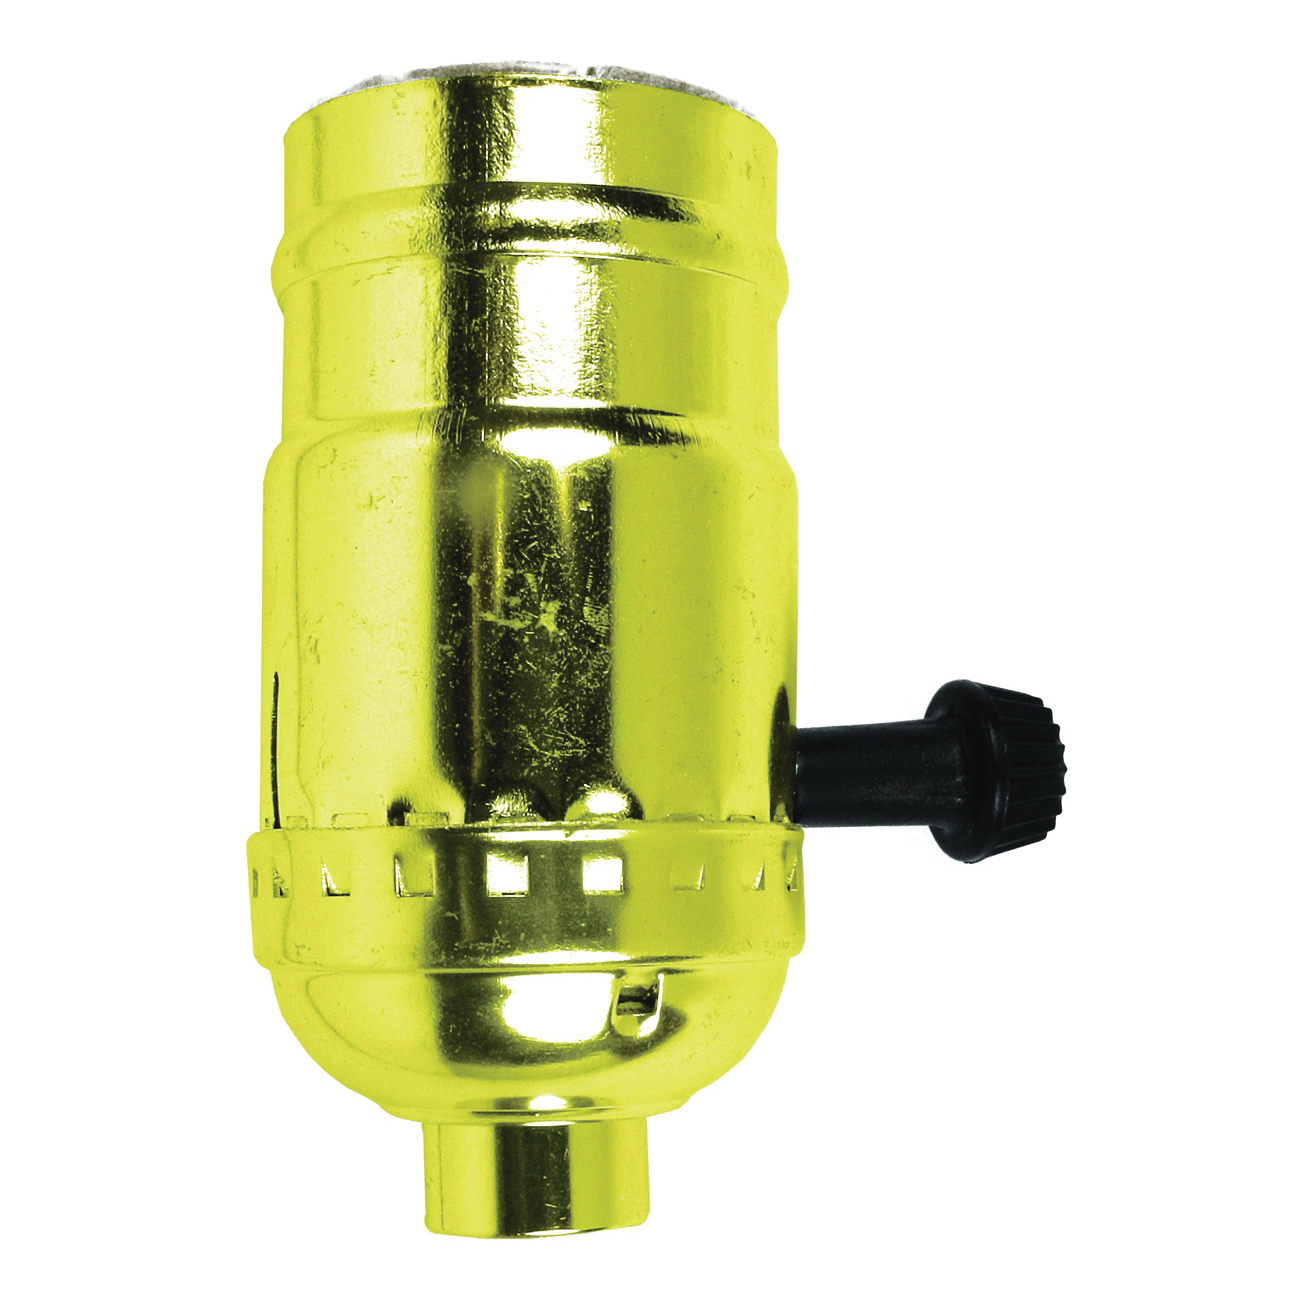 60409 Turn Knob Lamp Socket, 250 V, 250 W, Brass Housing Material